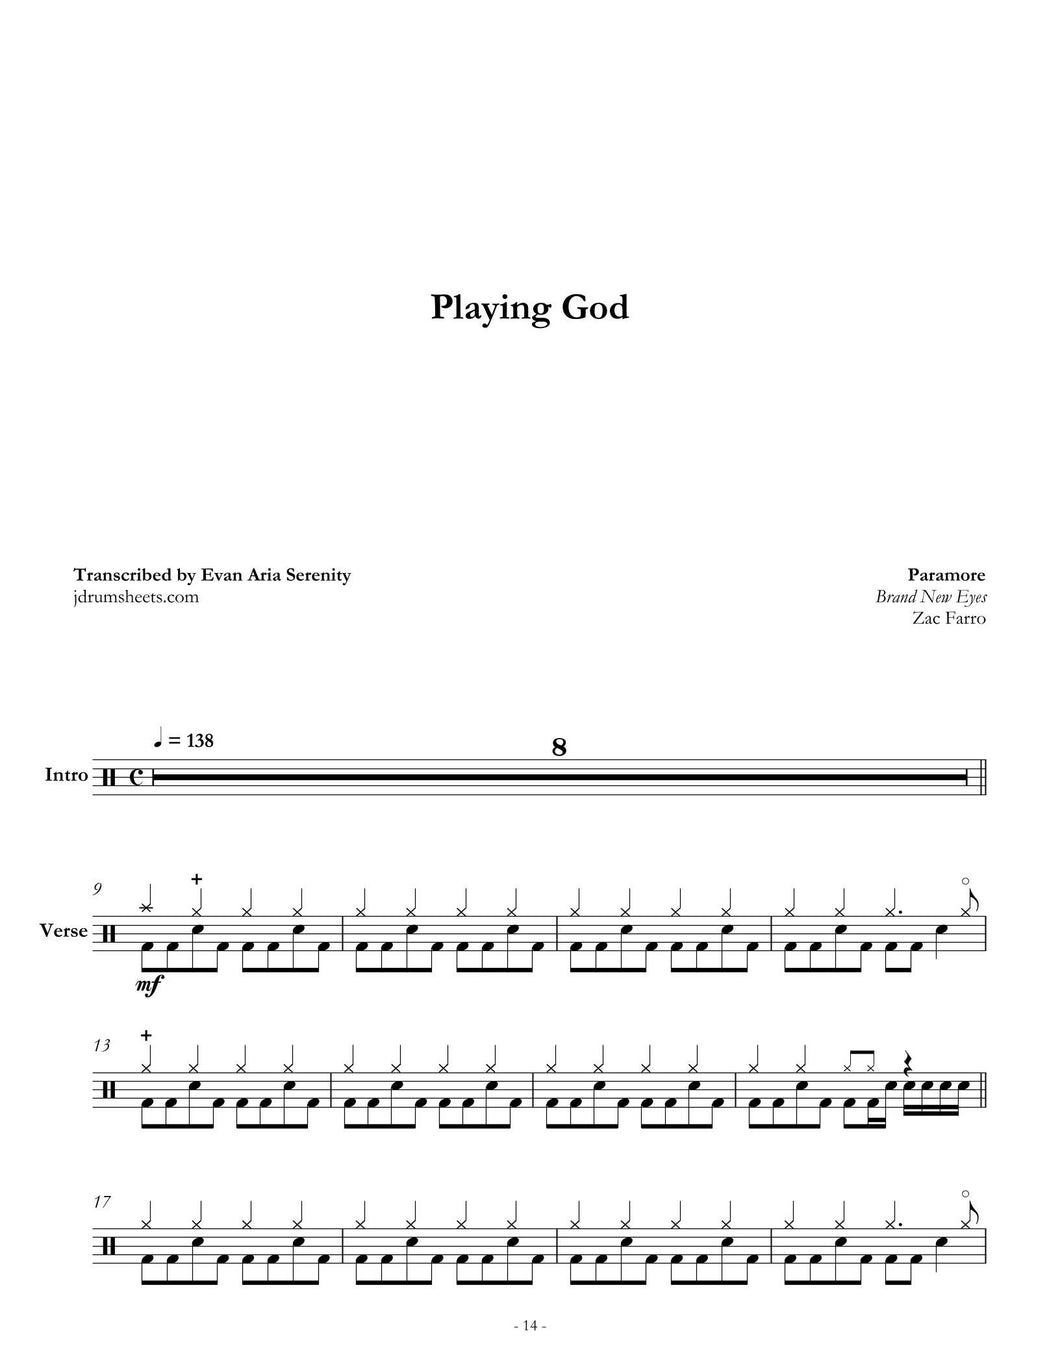 Playing God - Paramore - Full Drum Transcription / Drum Sheet Music - Jaslow Drum Sheets